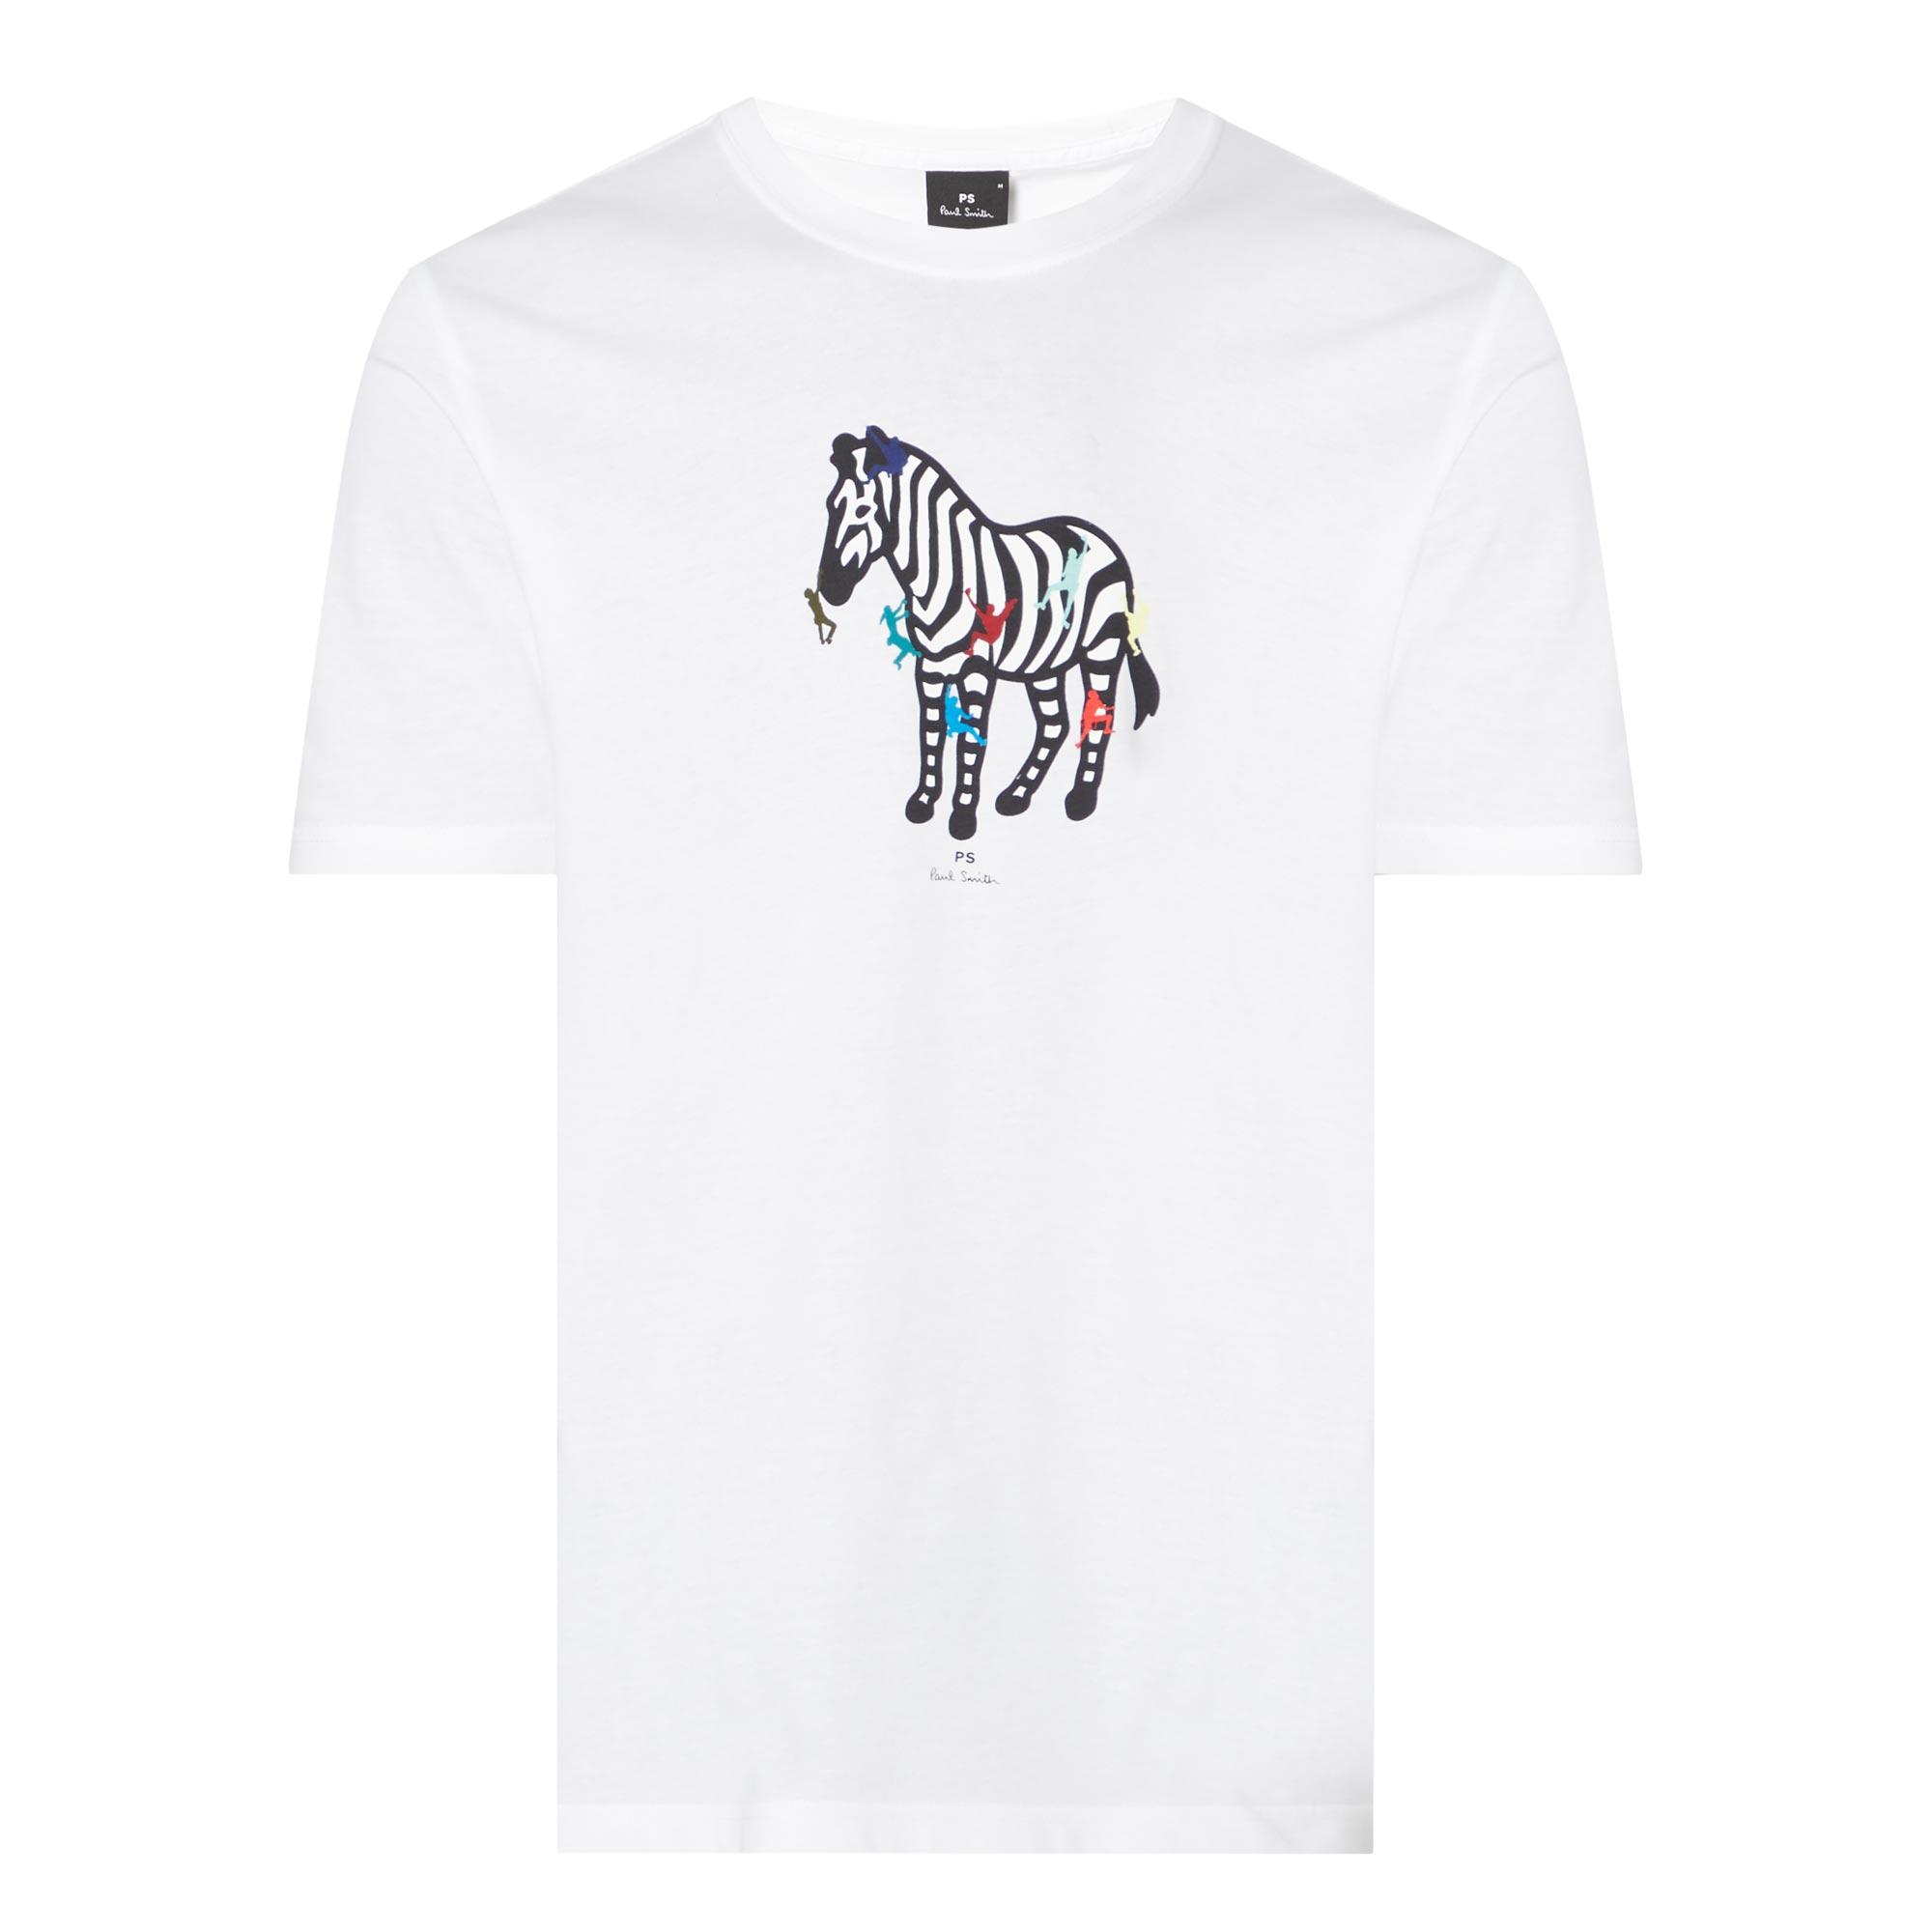 Zebra Paint T-Shirt